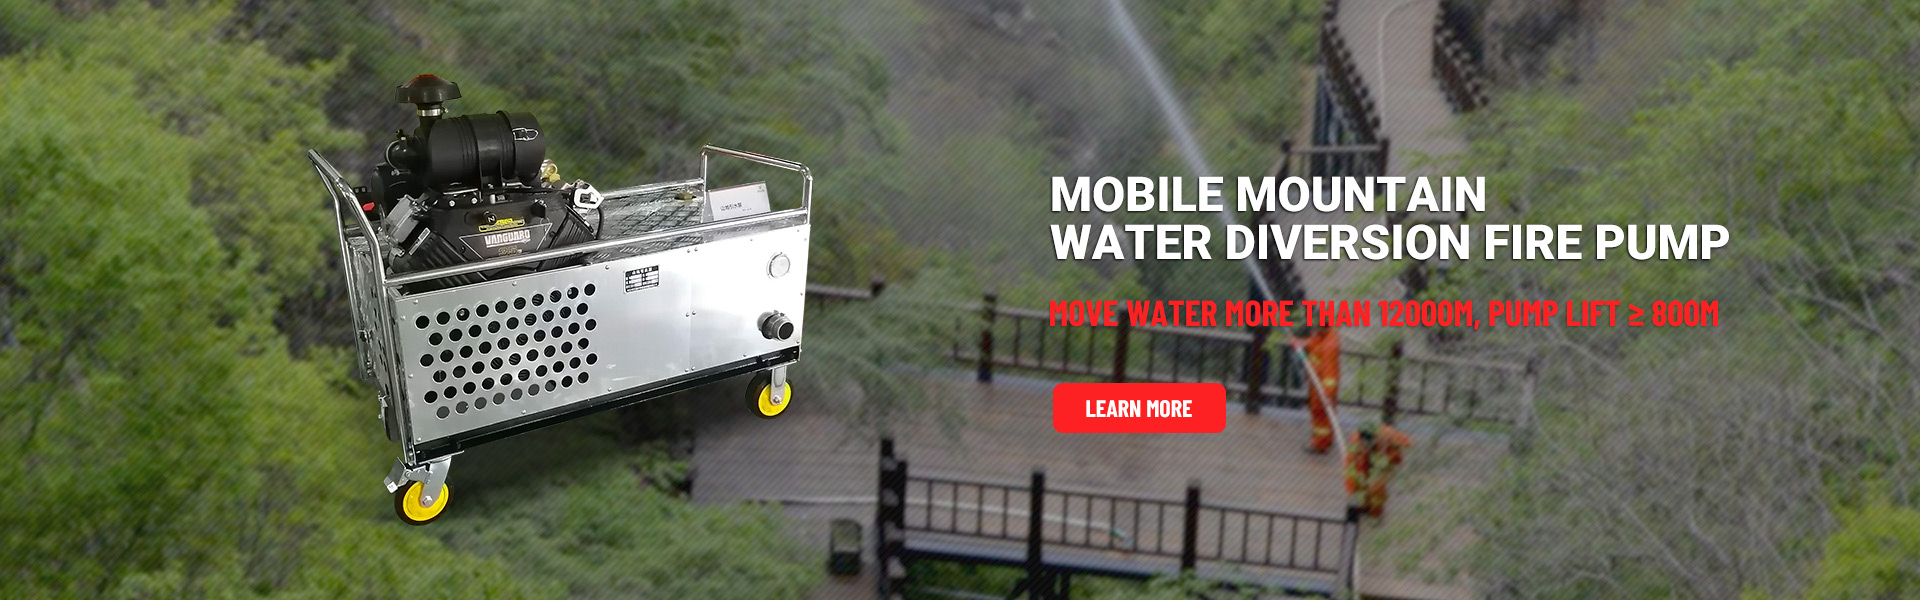 Mobile Water Diversion Fire Pump